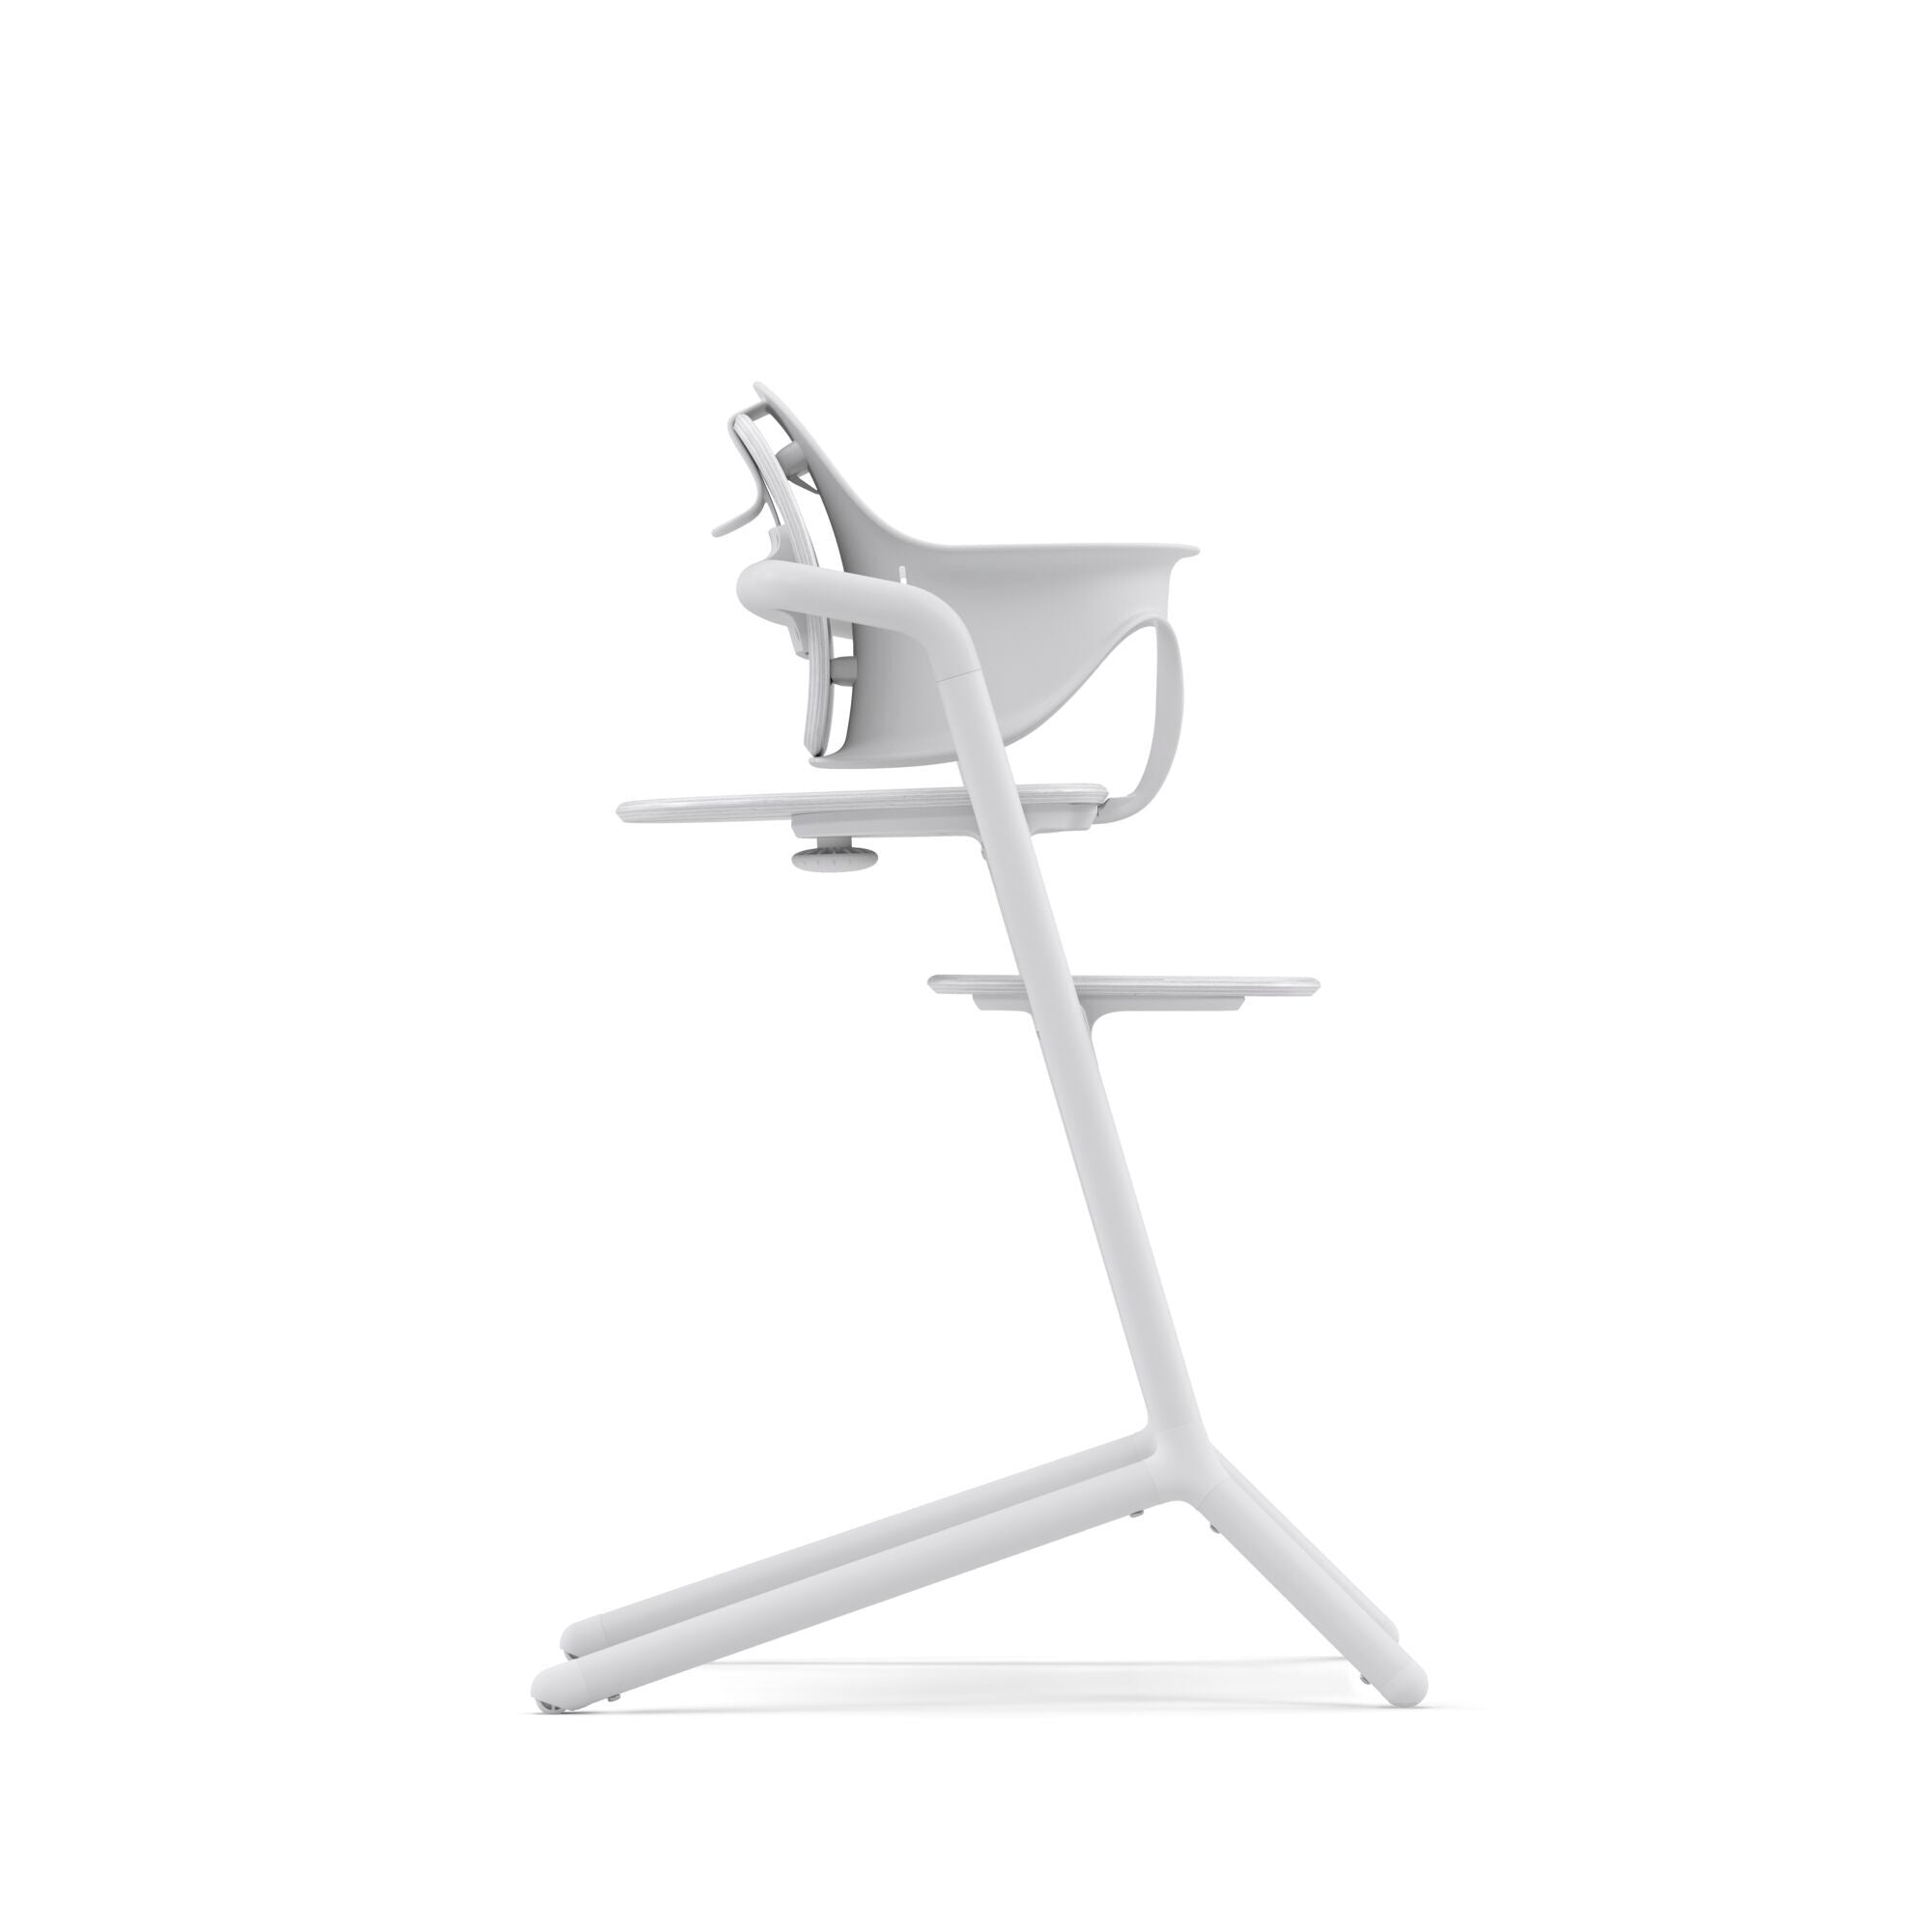 Cybex Lemo 2 High Chair 3-in-1 - ANB Baby -4063846288199$100 - $300